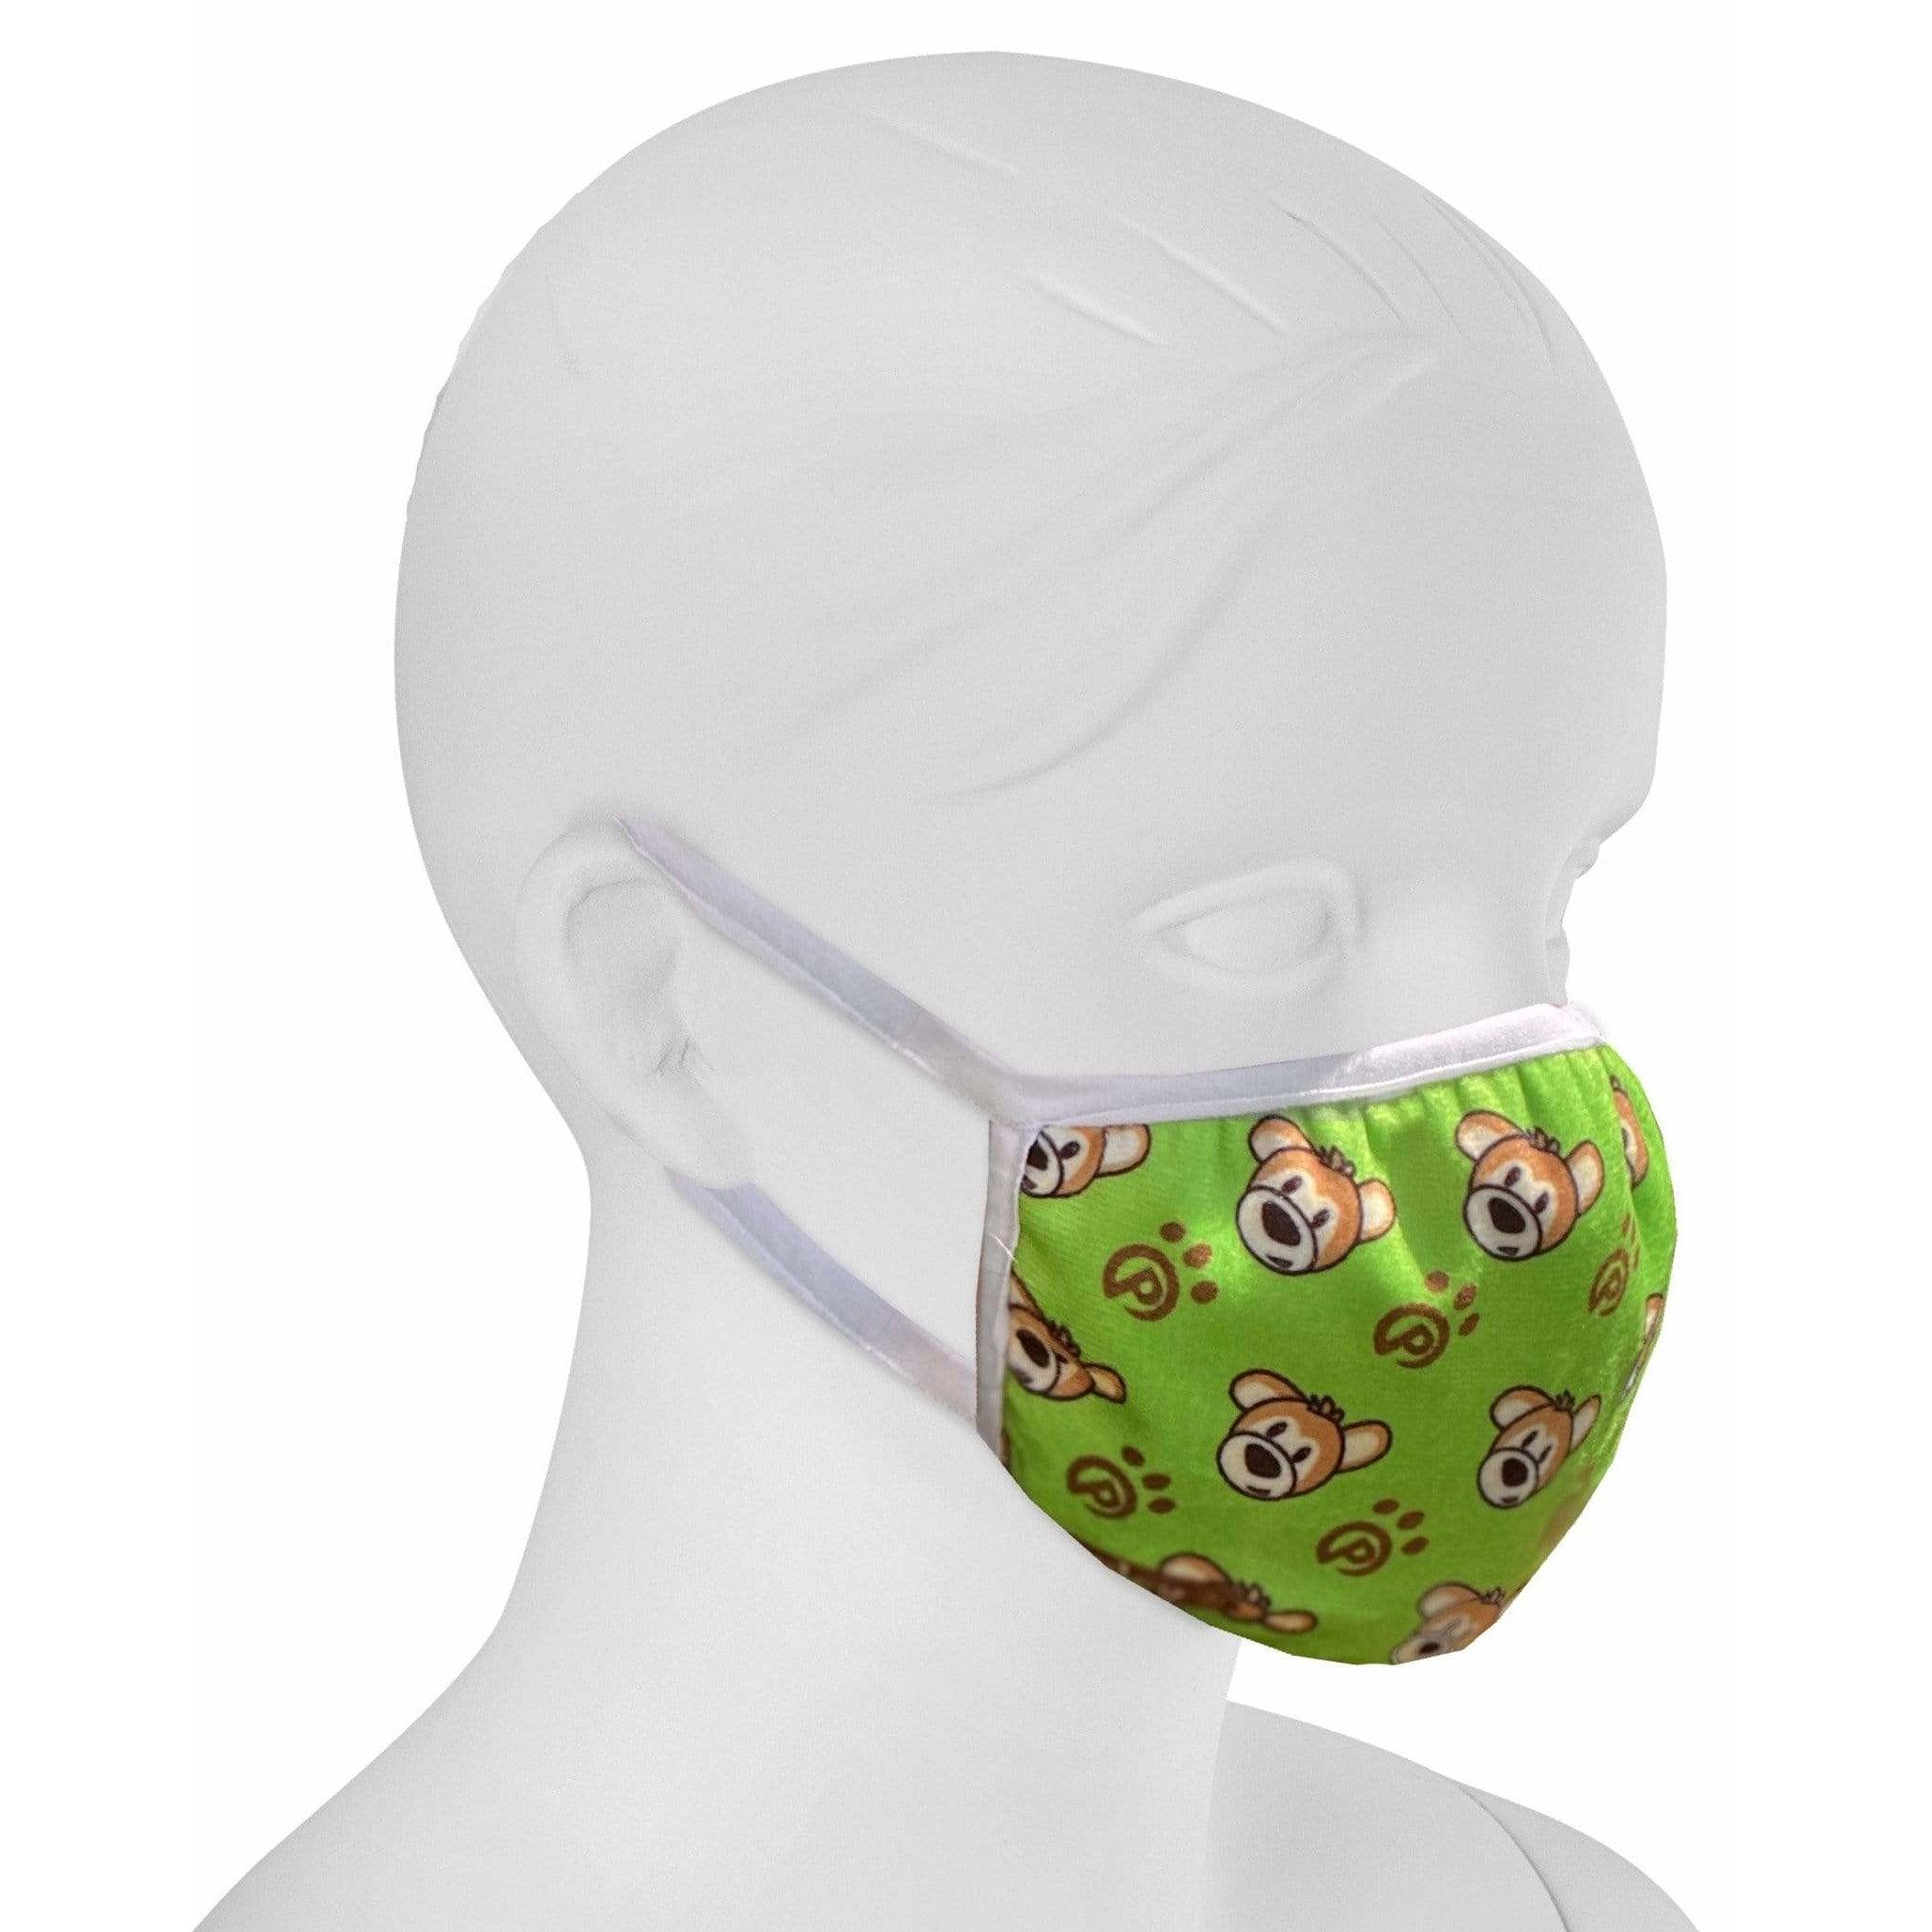 Plushible Face Mask Six Pack: Mixed Unicorn and Bear Prints - OrangeOnions Wholesale